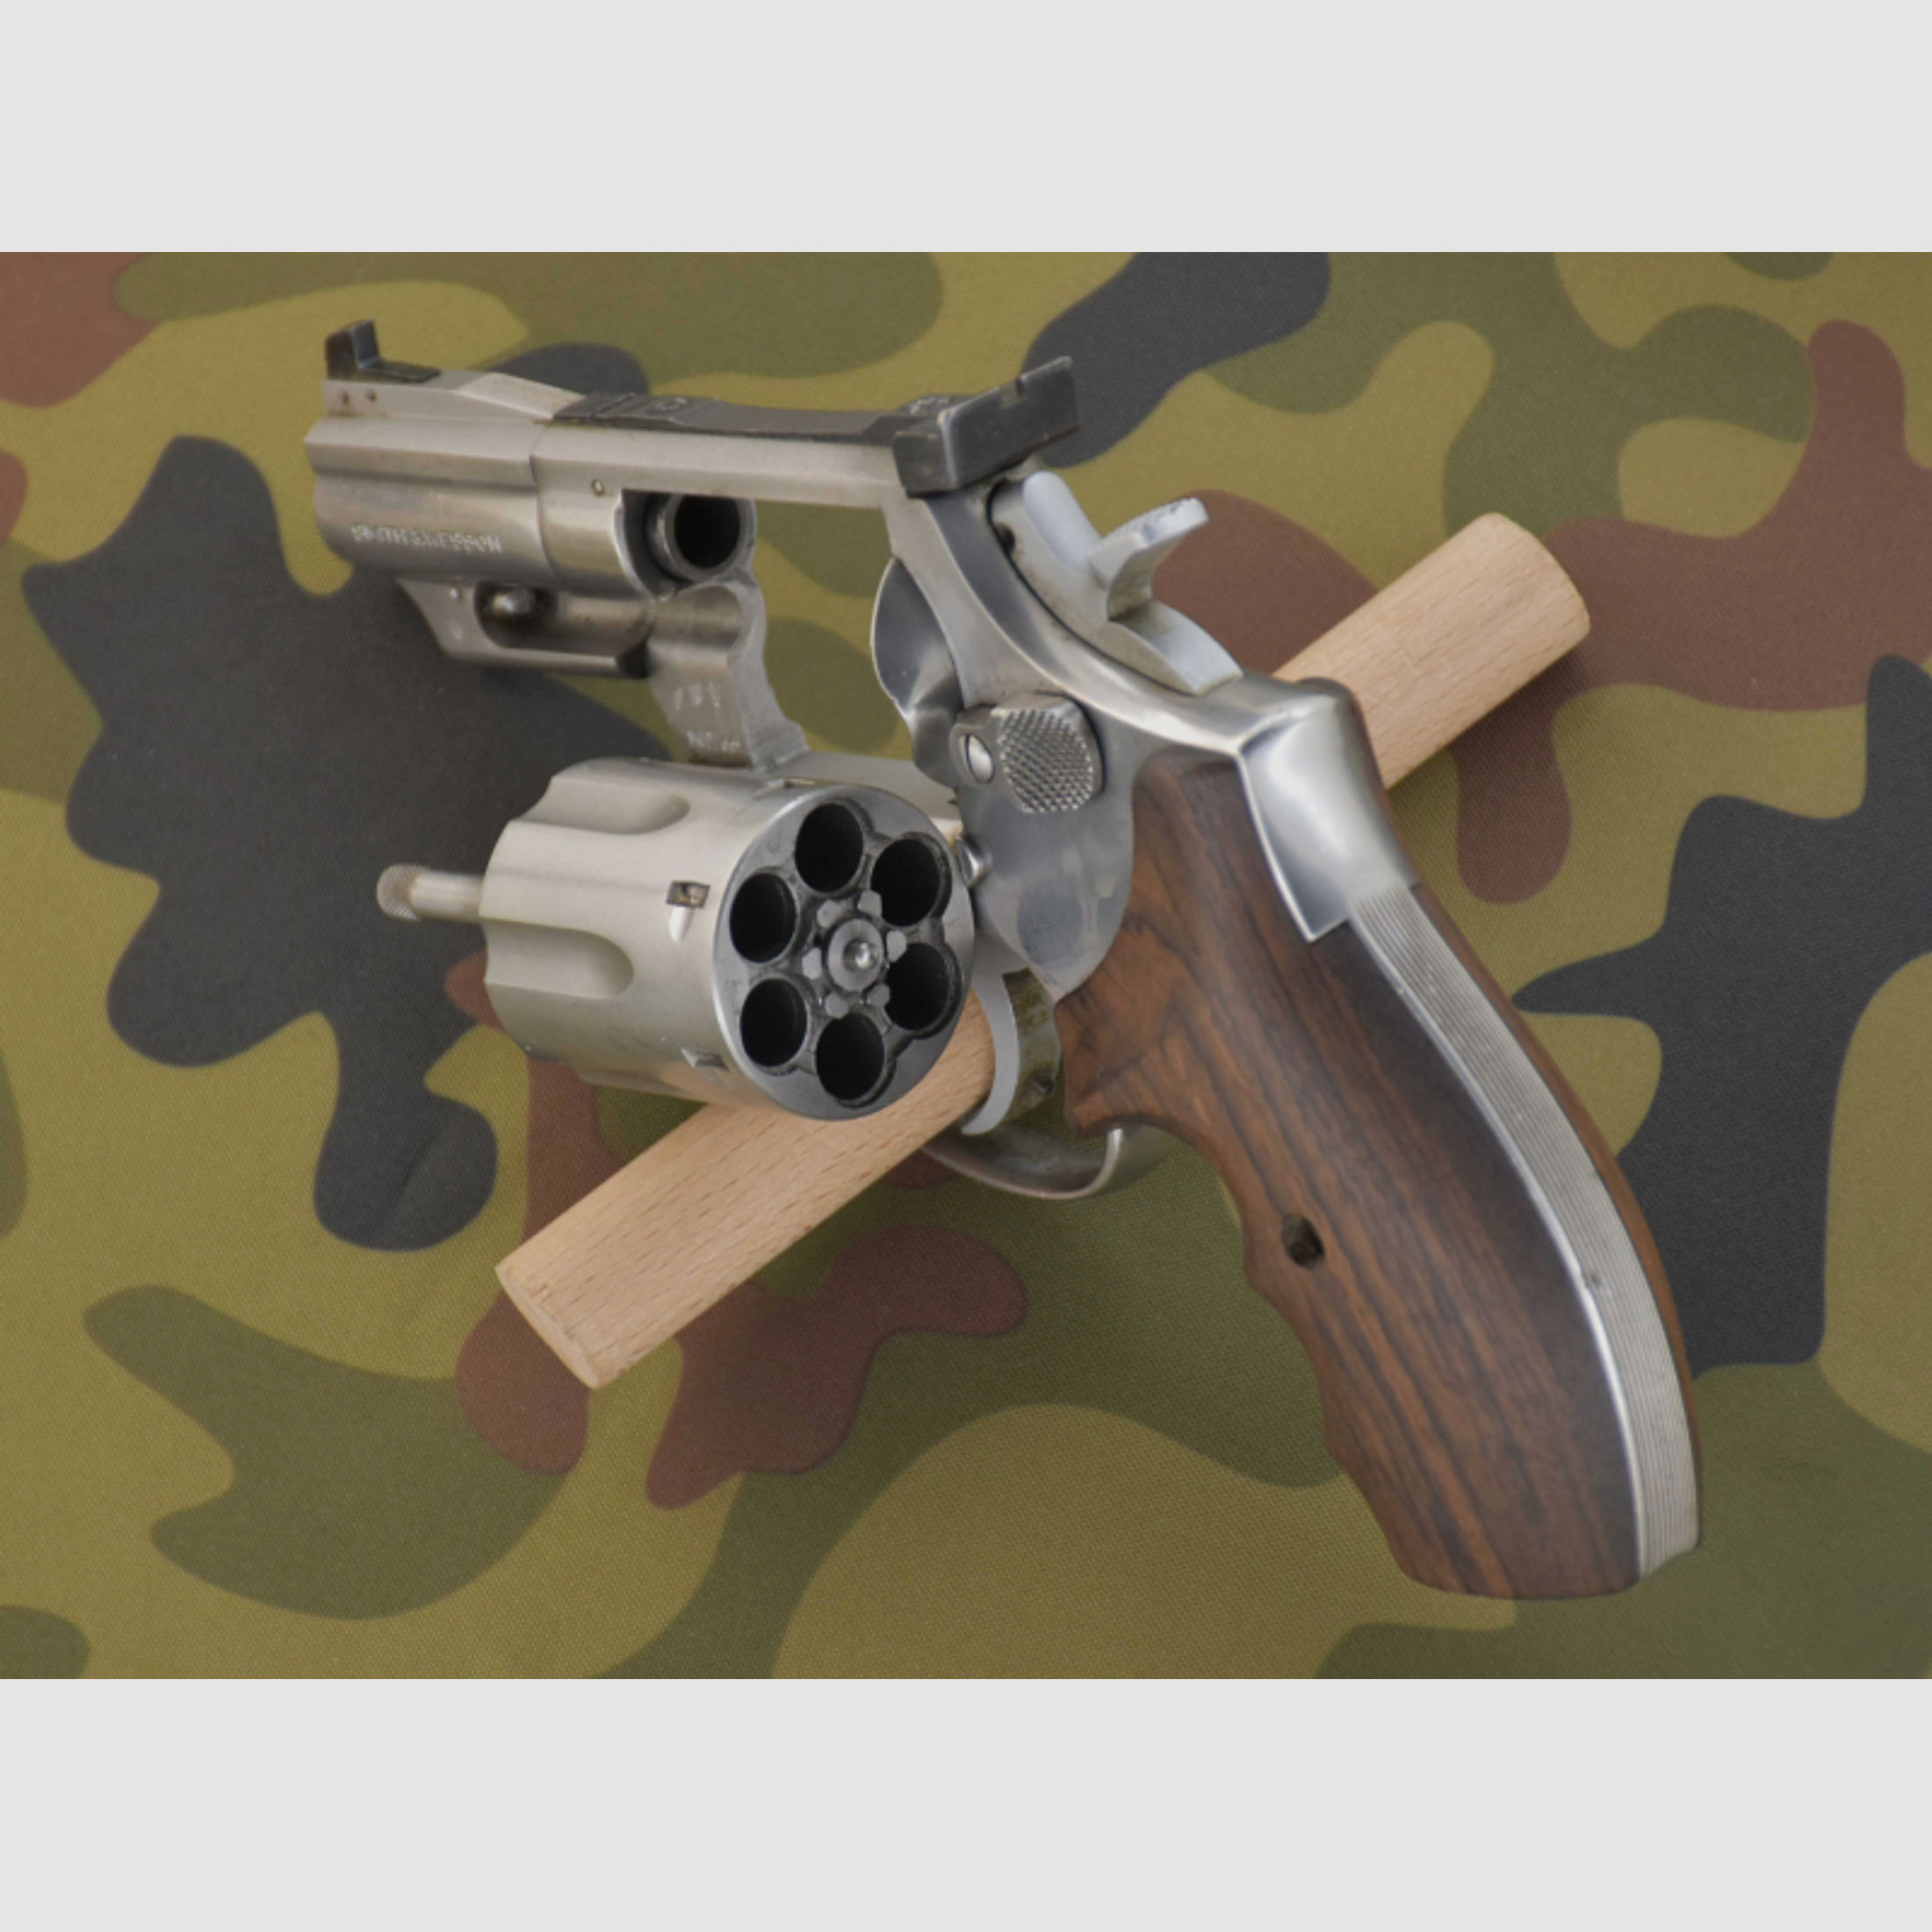 Revolver Fangschusswaffe Smith & Wesson Mod. 66-1 Kal. .357 Magnum Bj. 1980, stainless 2,5 Zoll-Lauf